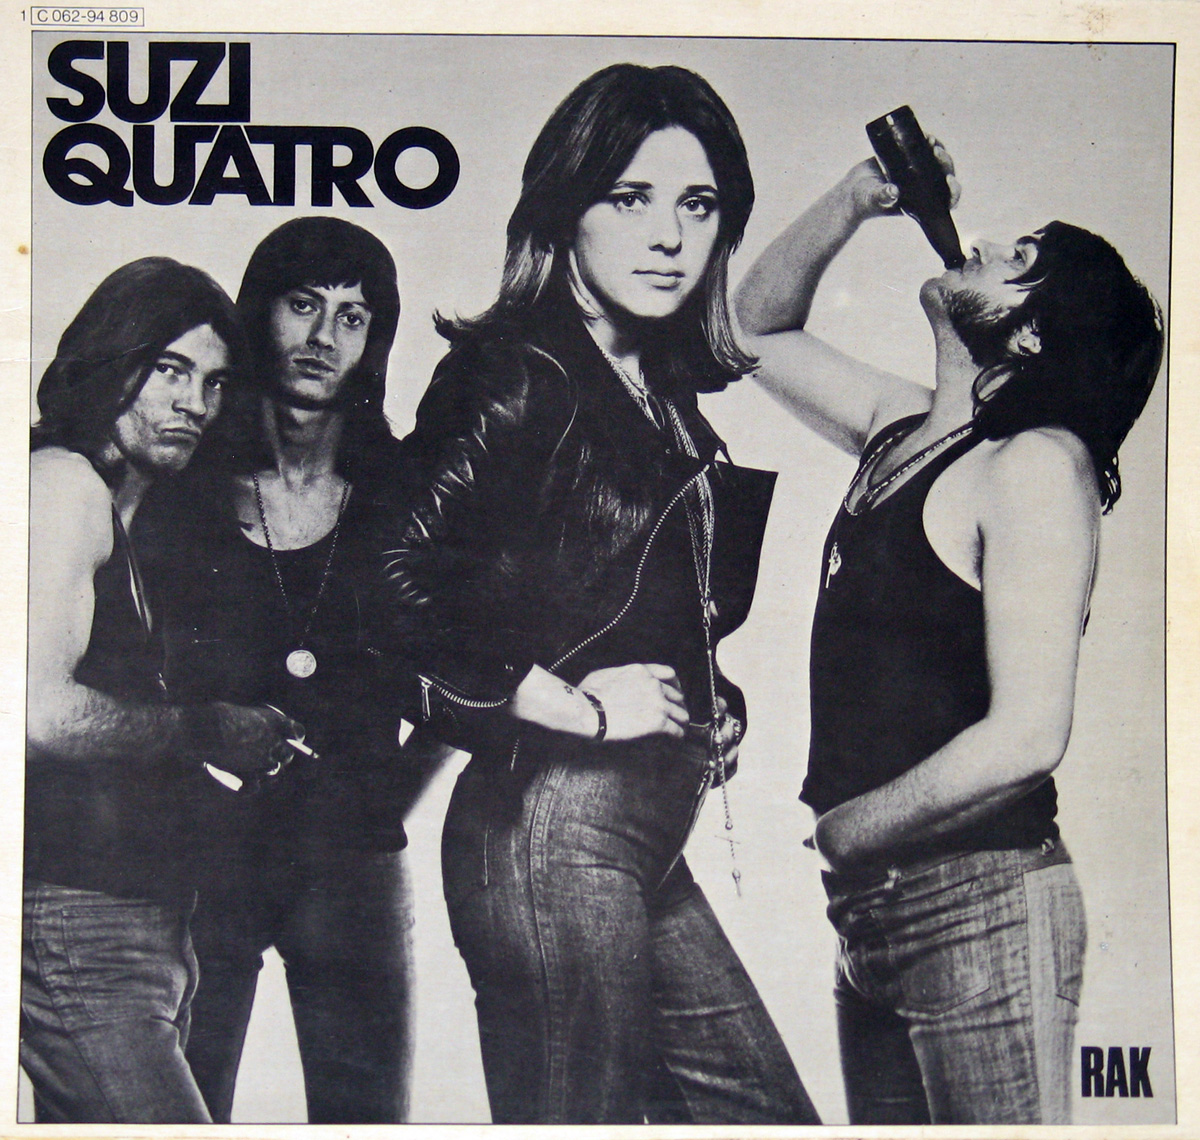 Suzi Quatro - S/T self-titled